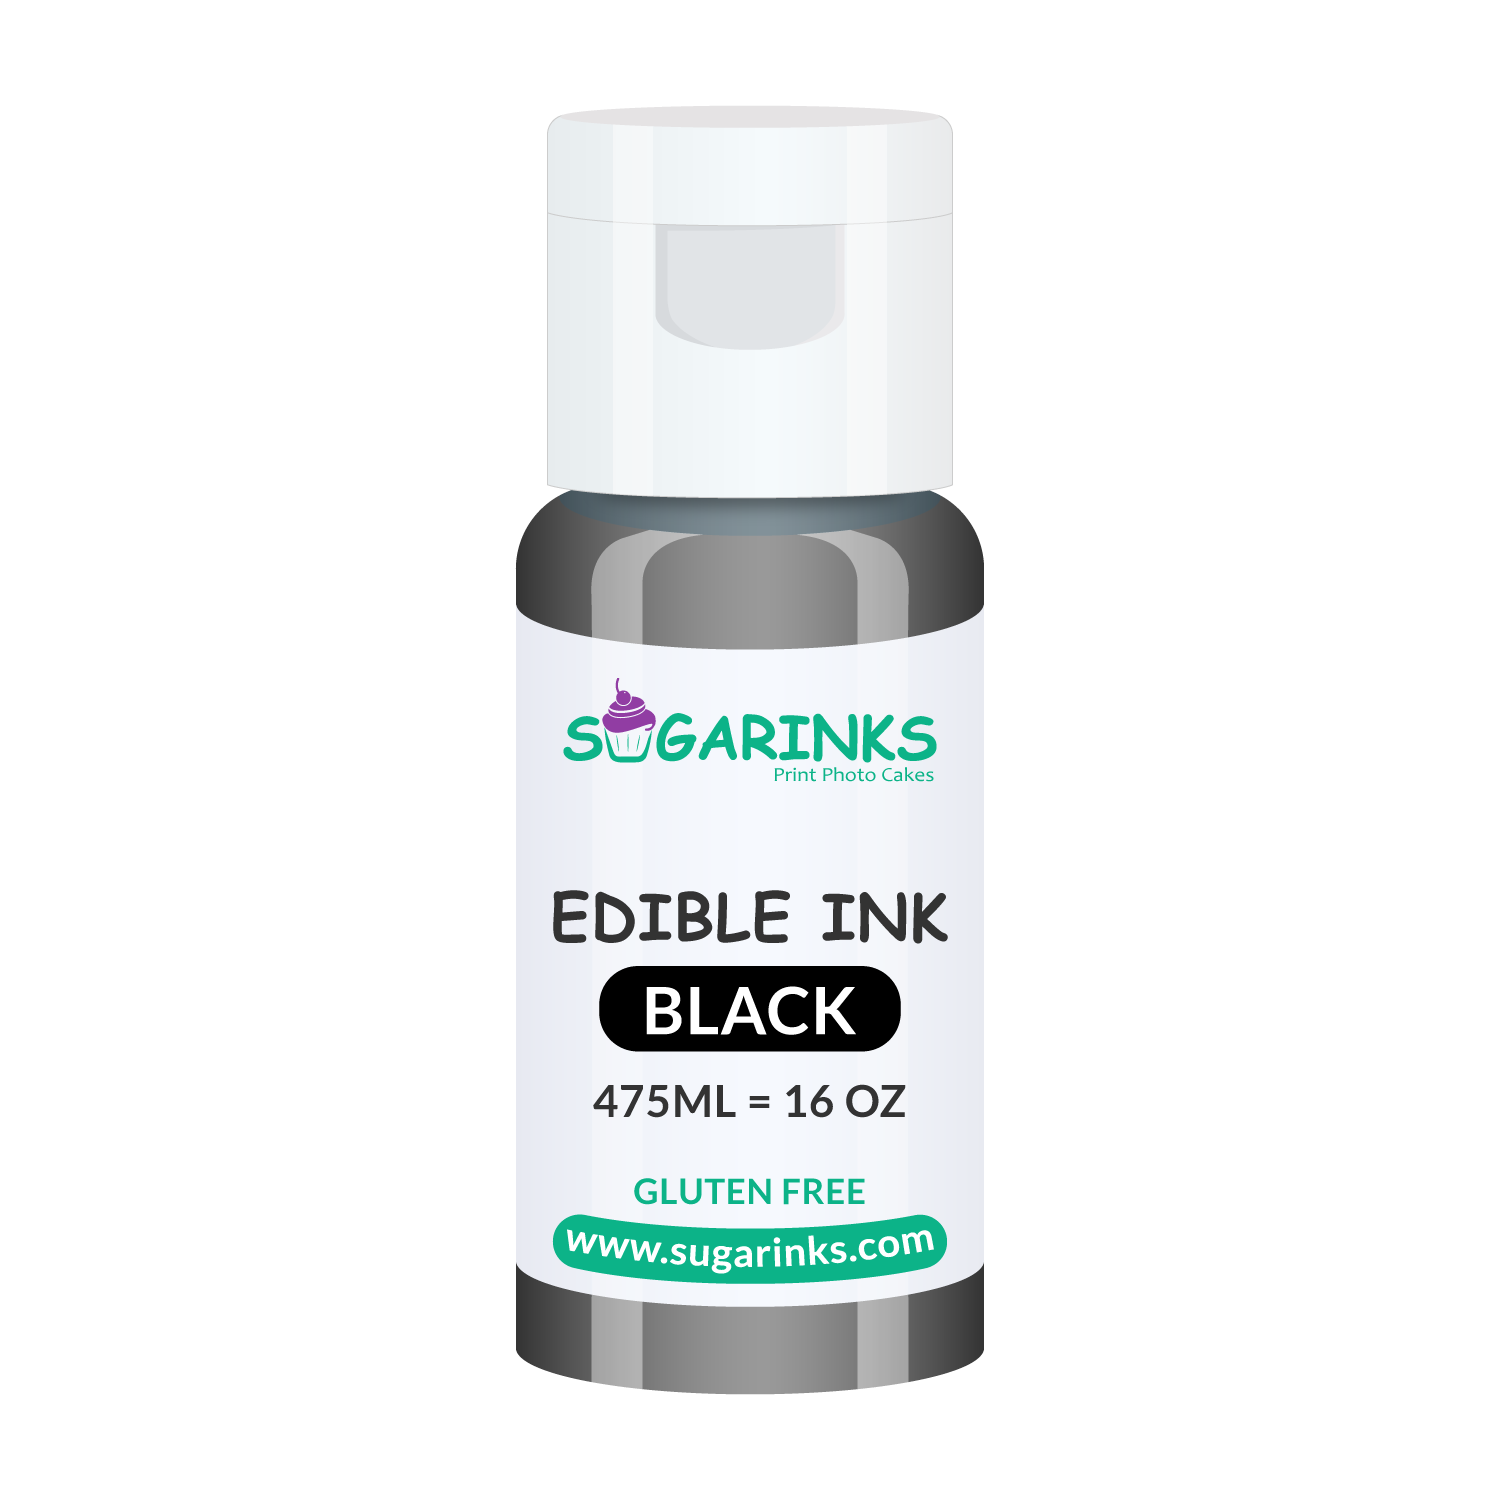 Sugarinks Edible Ink Refill for Epson Edible Printers (475ml/16Oz) – Black